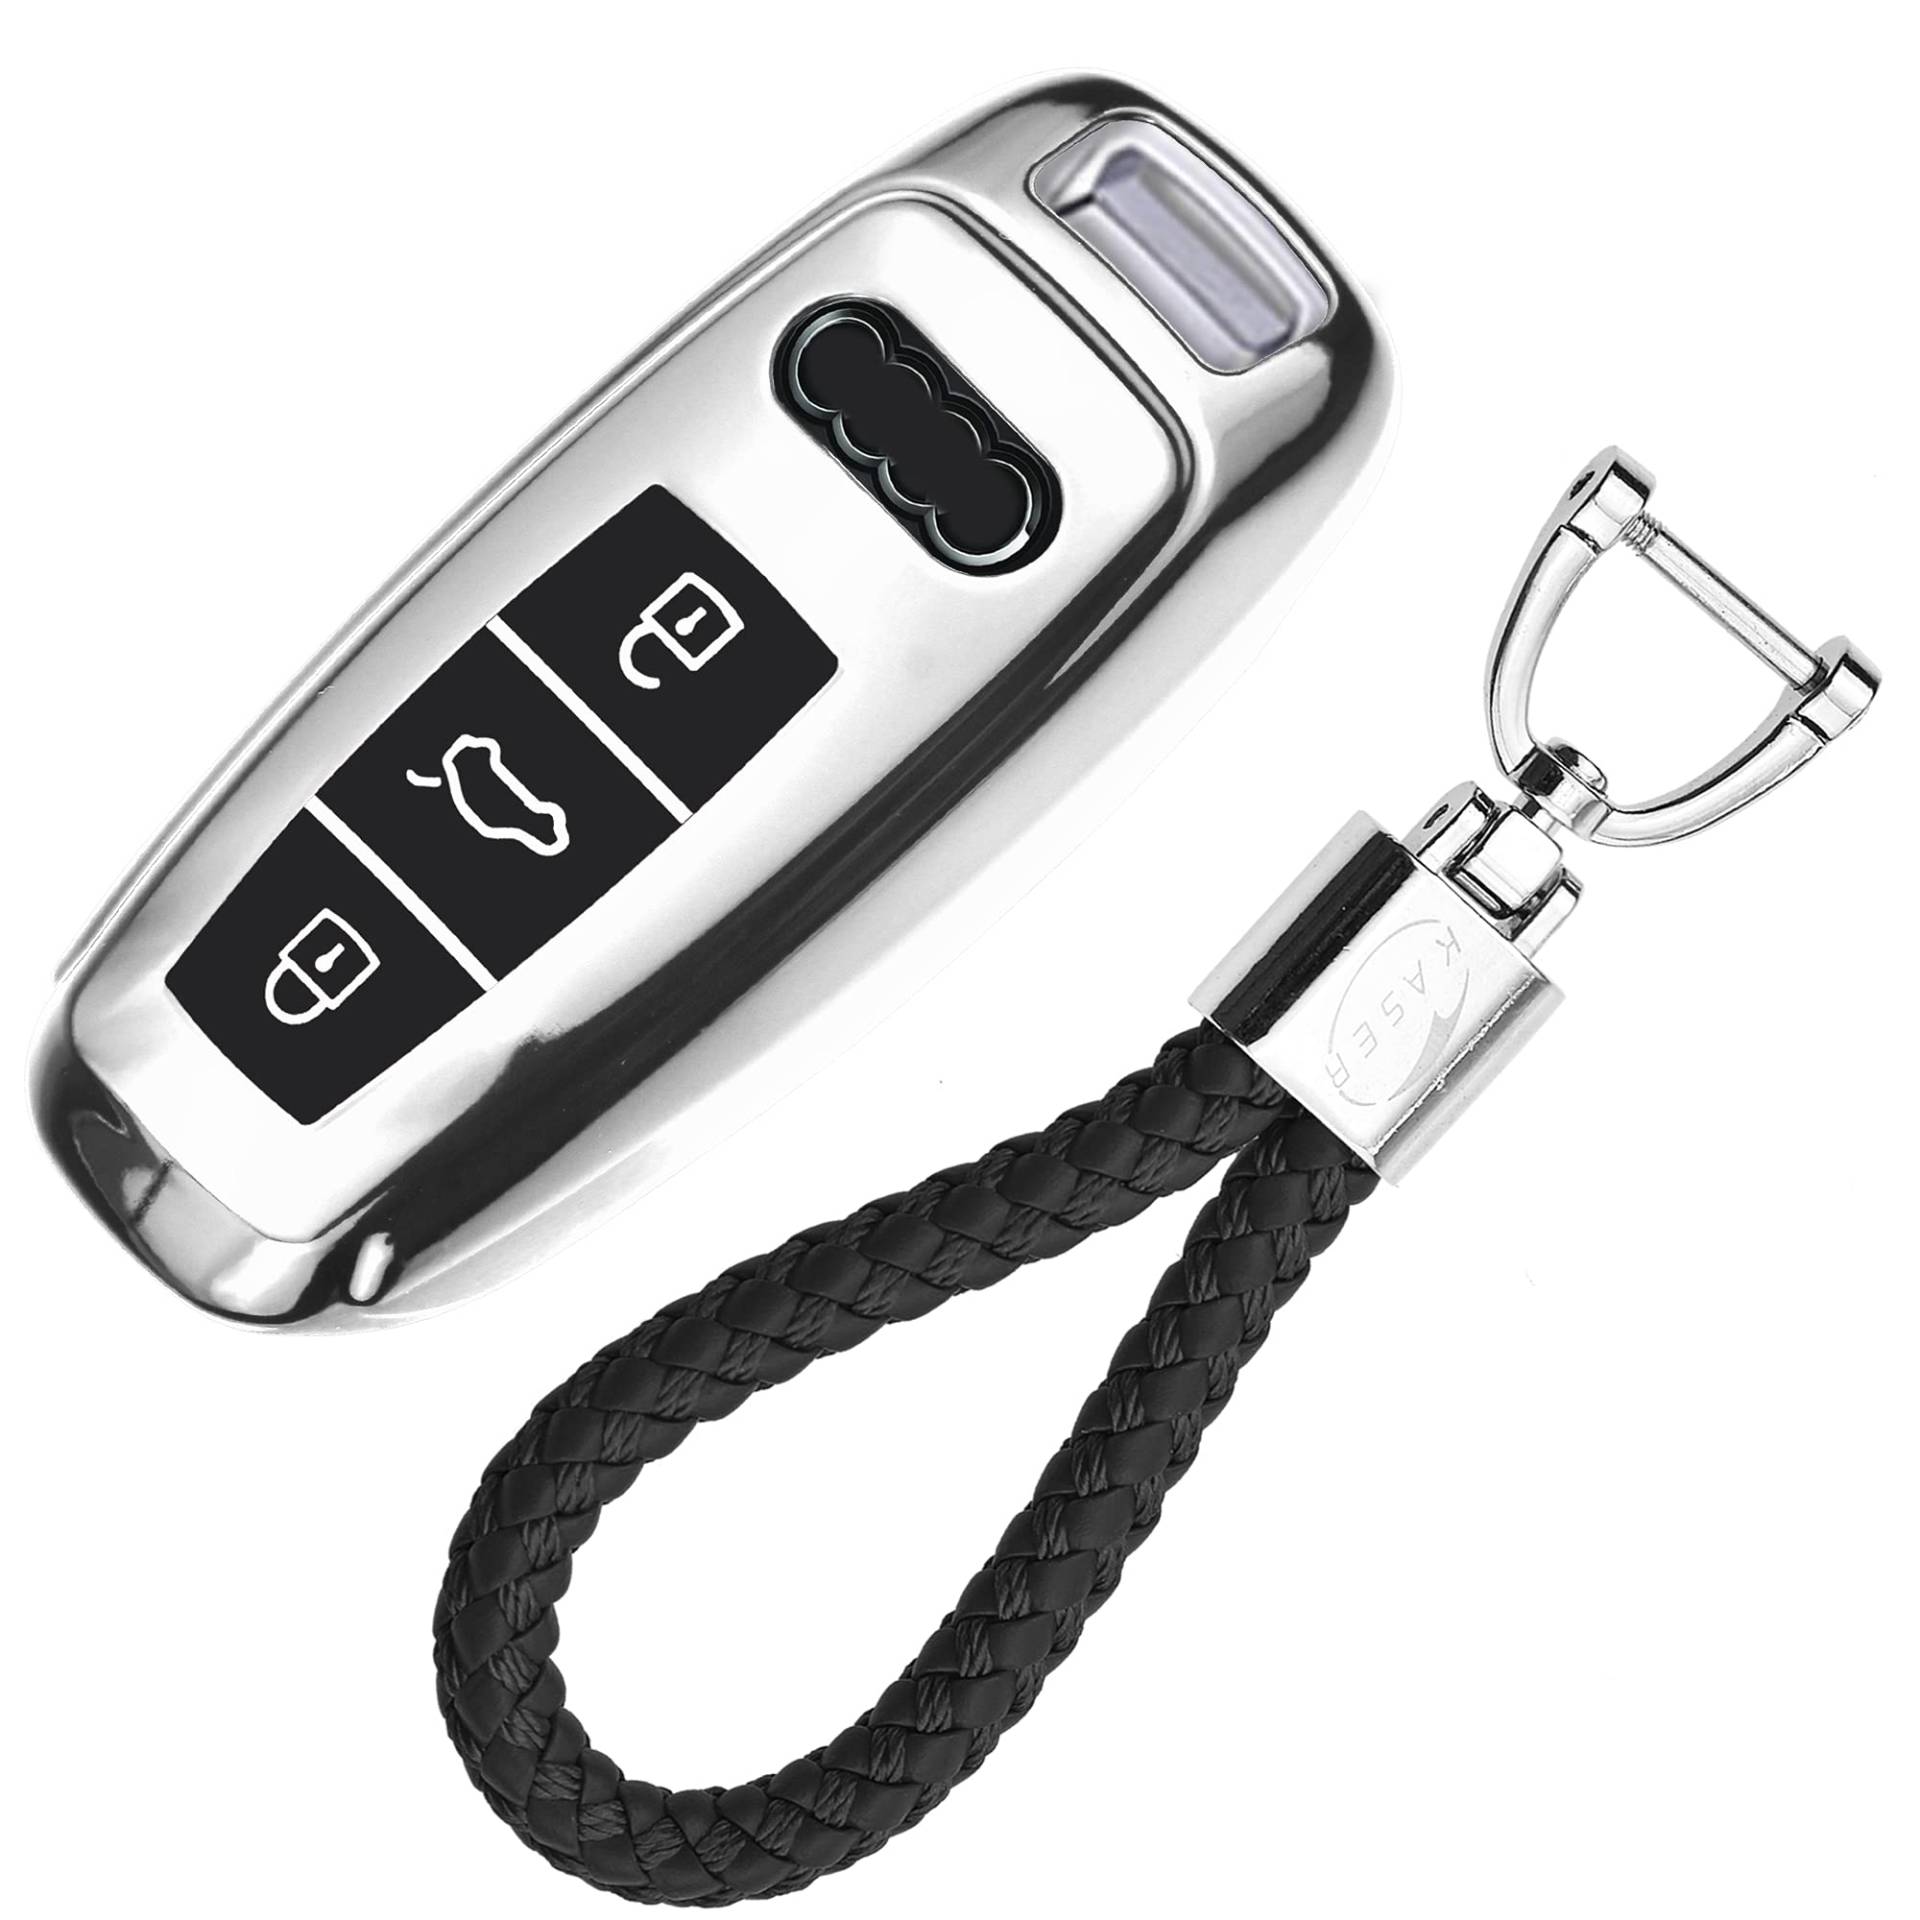 KASER Autoschlüssel Hülle kompatibel für Audi Cover TPU Silikon Hochglanz Schutzhülle Schlüsselhülle Fernbedienung Keyless A1 A3 A4 A5 A7 A8 Q3 Q5 Q7 TT Schlüsselbund (Silber) von Kaser